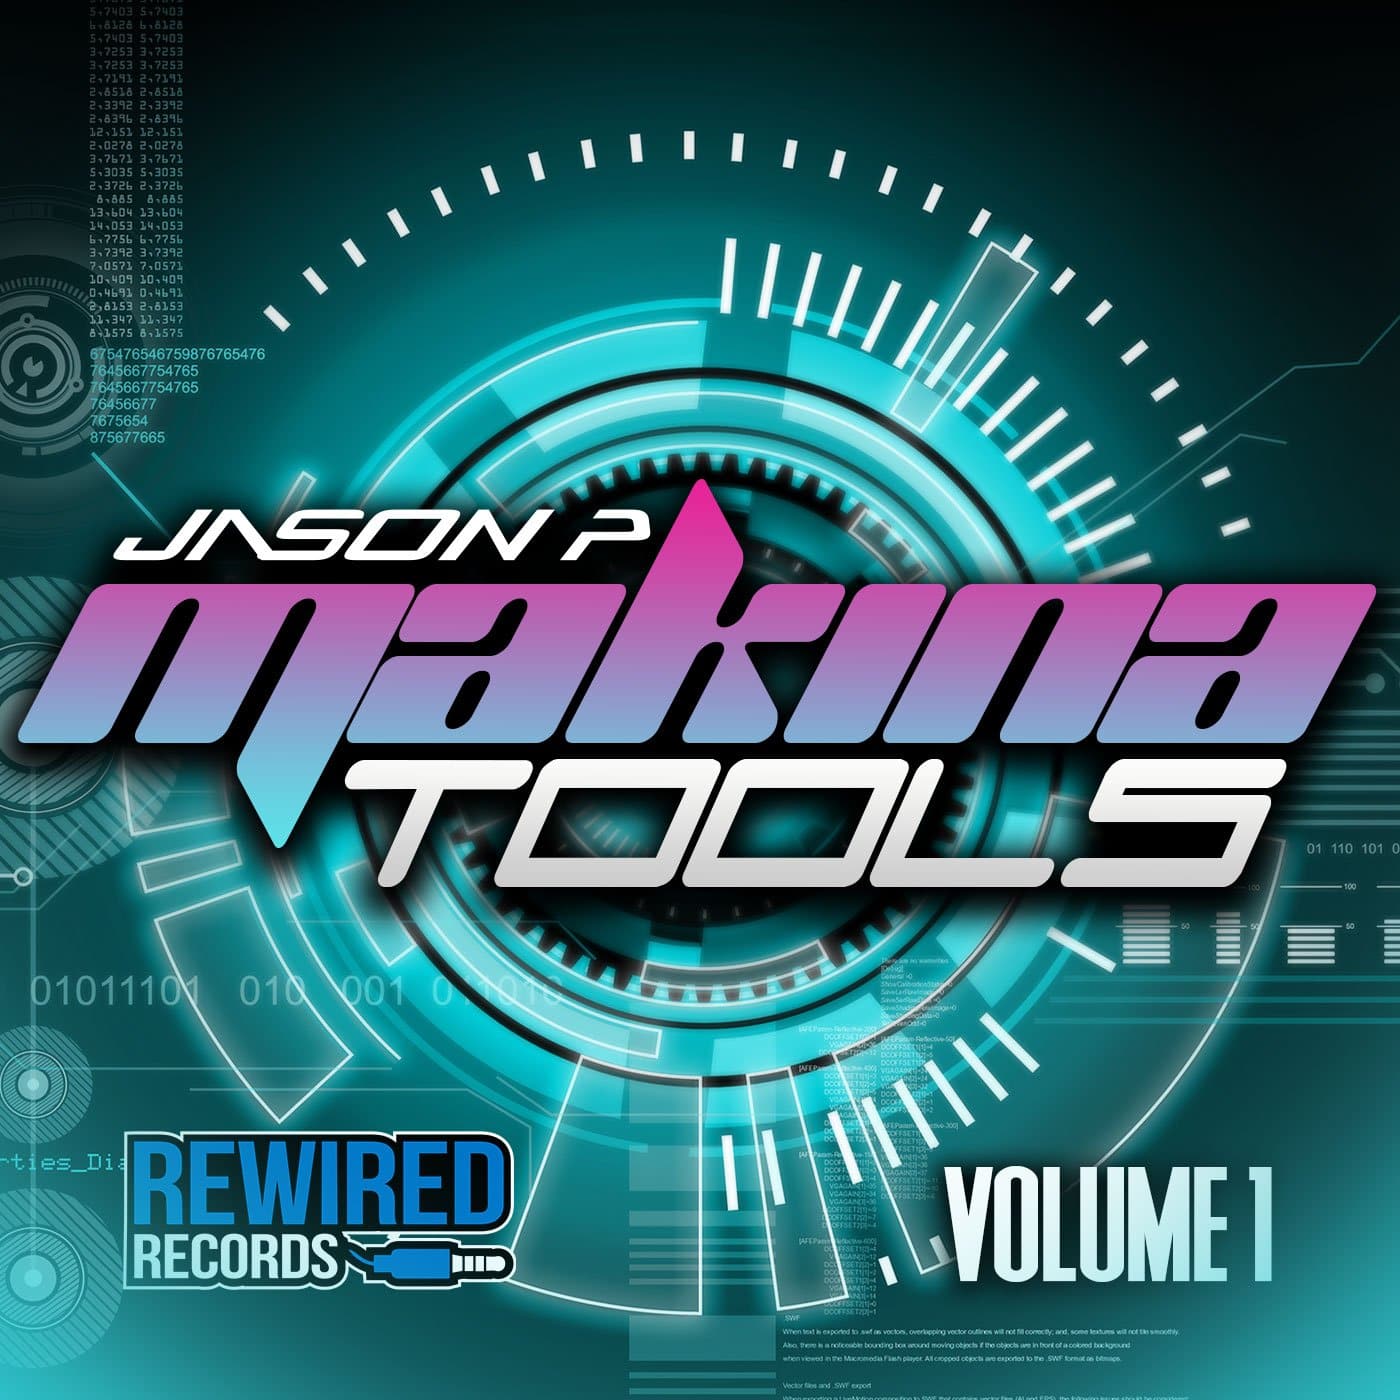 Jason P - Makina Tools Volume 1 - Rewired Records